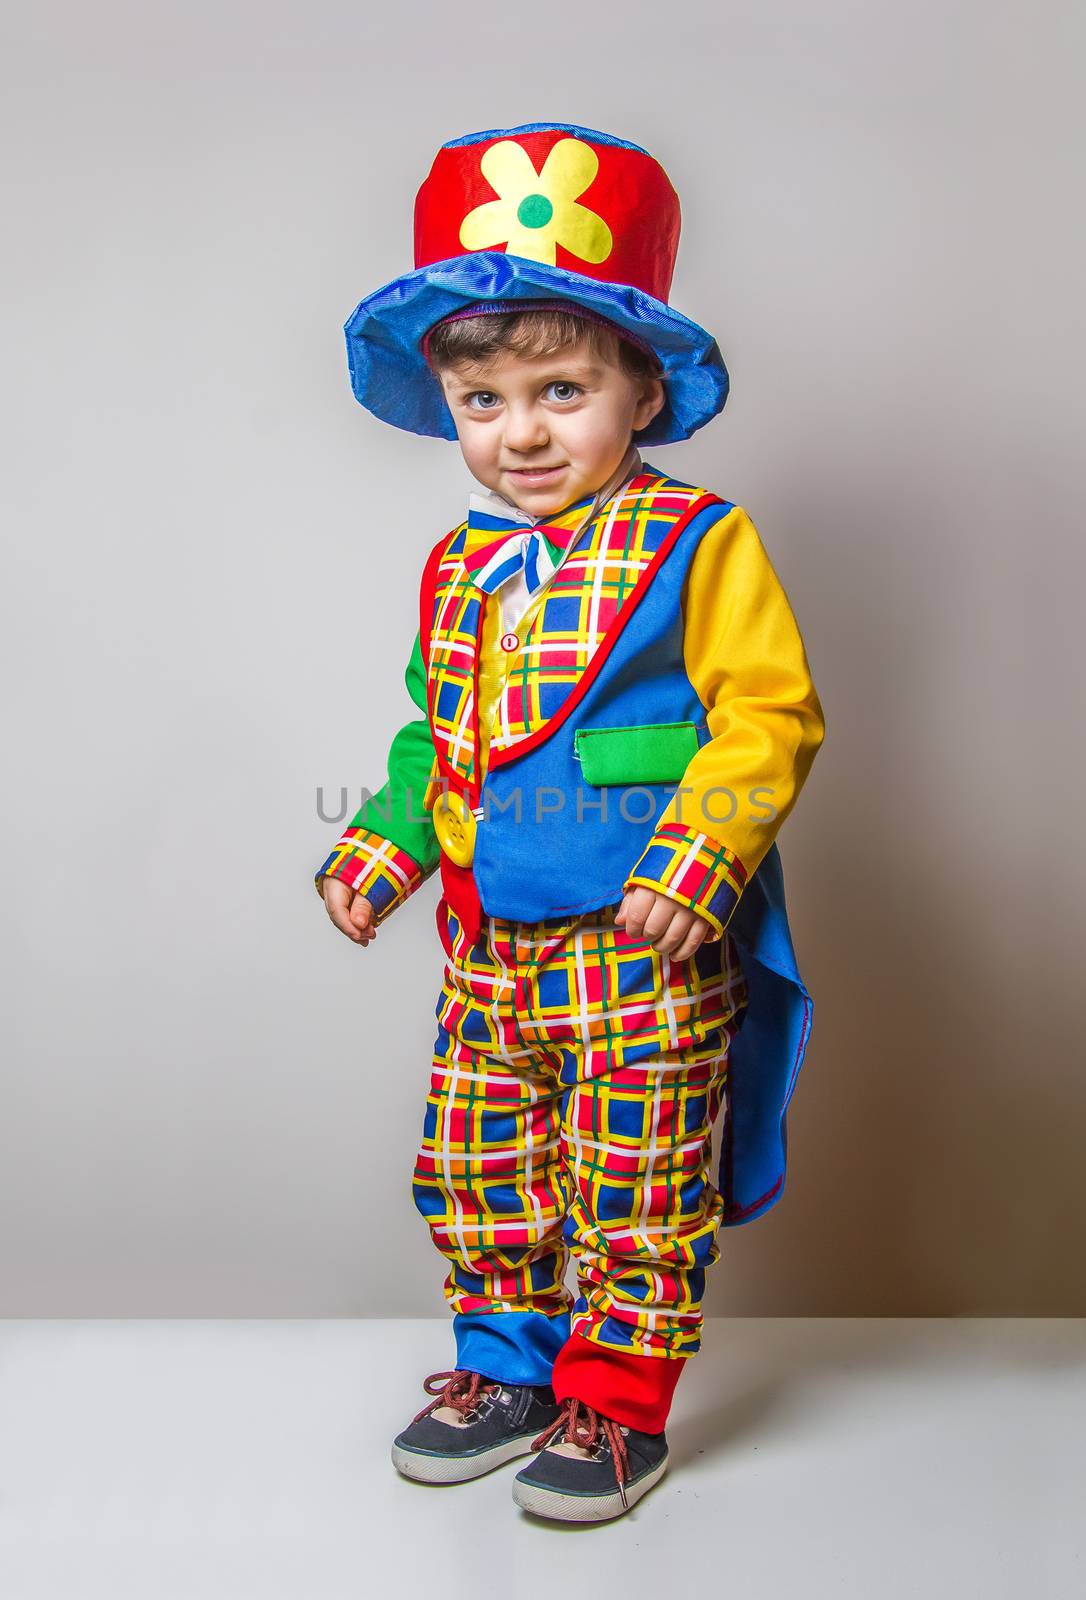 Clown suit by dynamicfoto